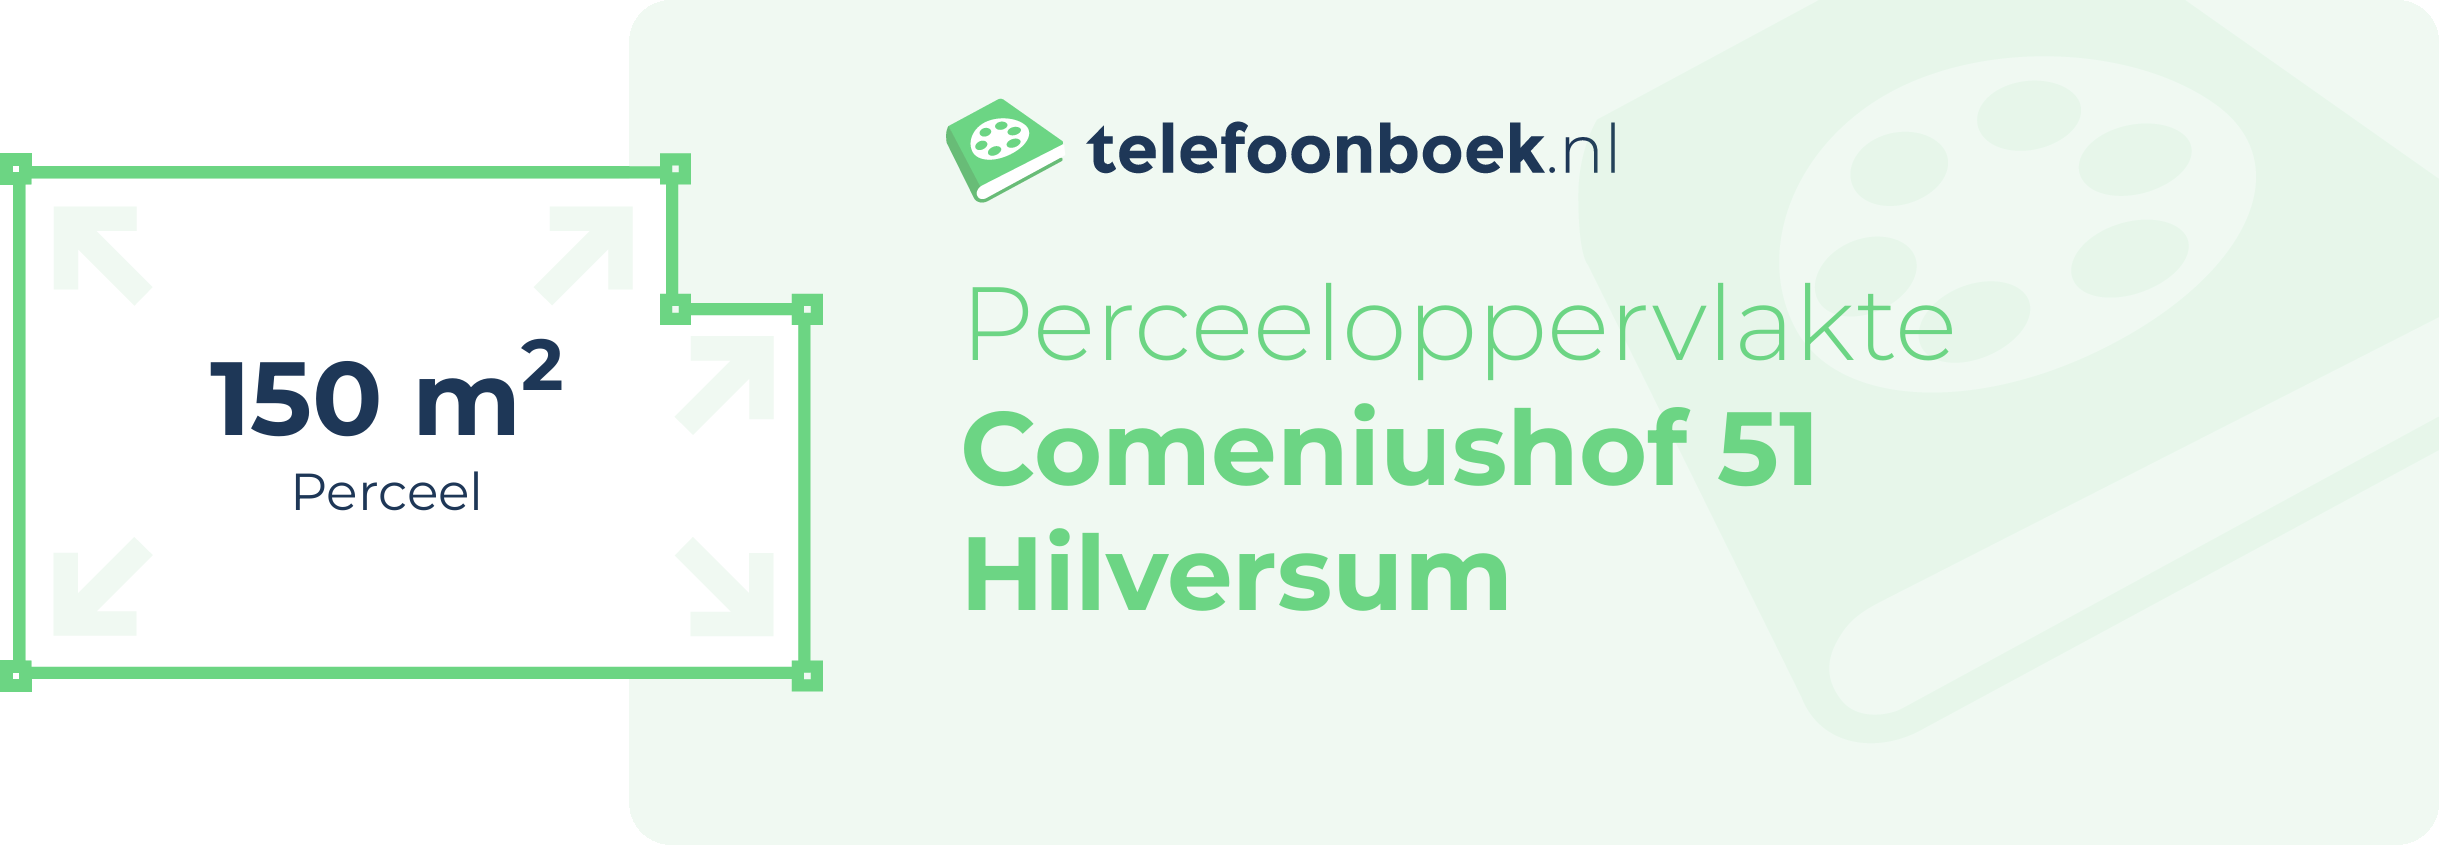 Perceeloppervlakte Comeniushof 51 Hilversum